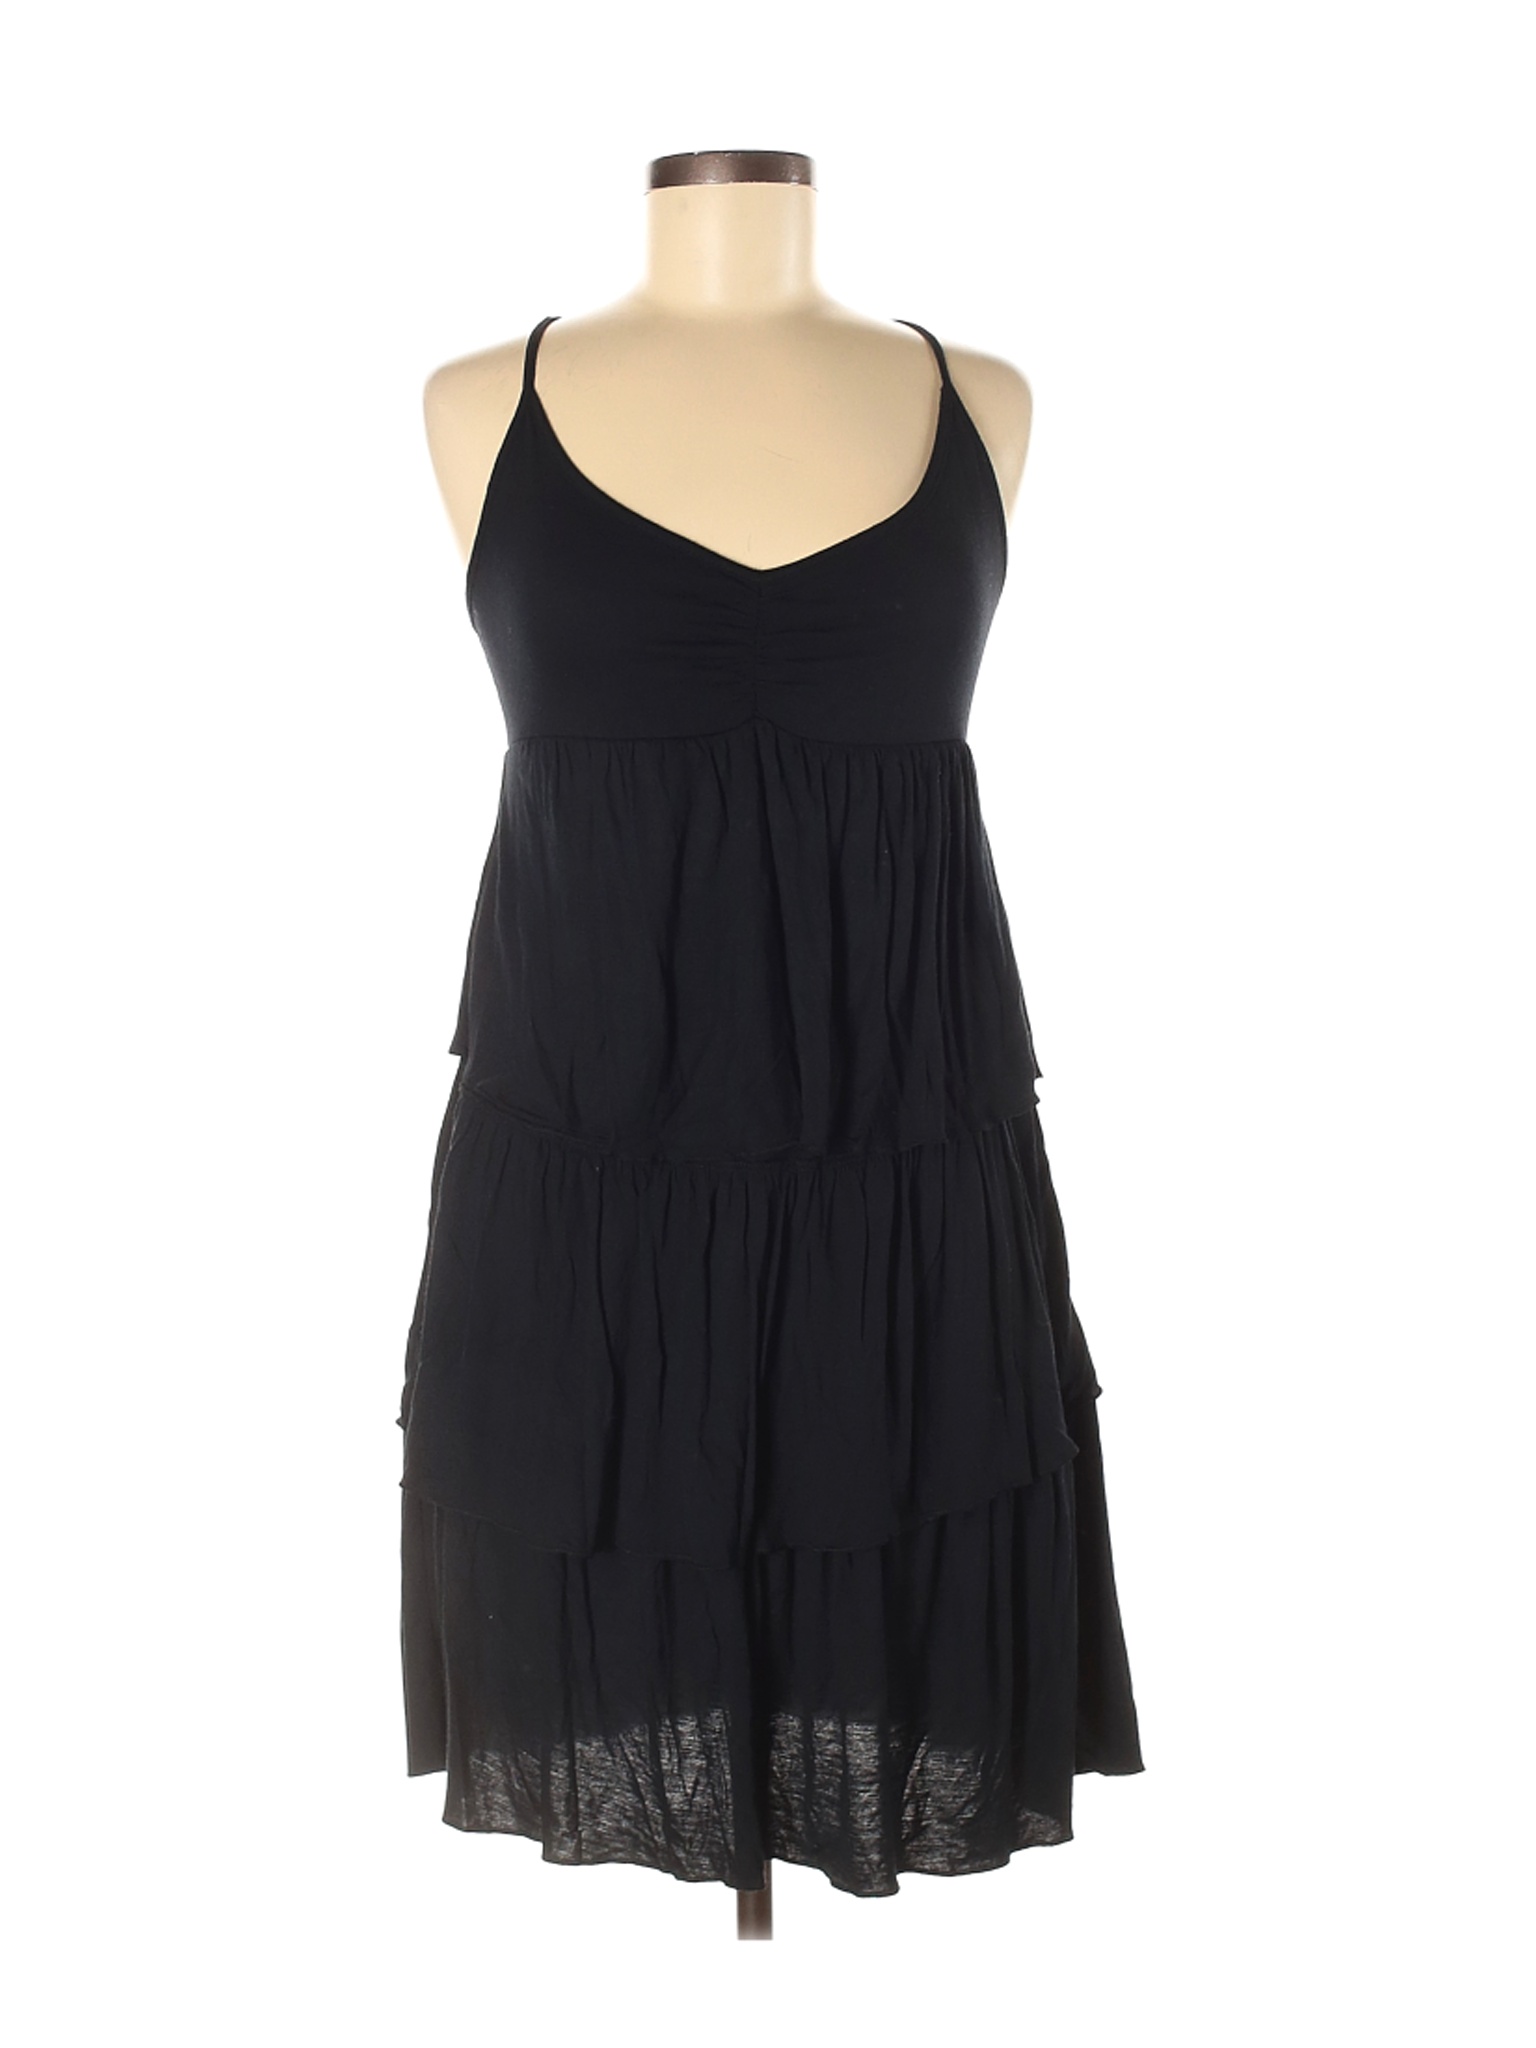 Old Navy Women Black Casual Dress M | eBay